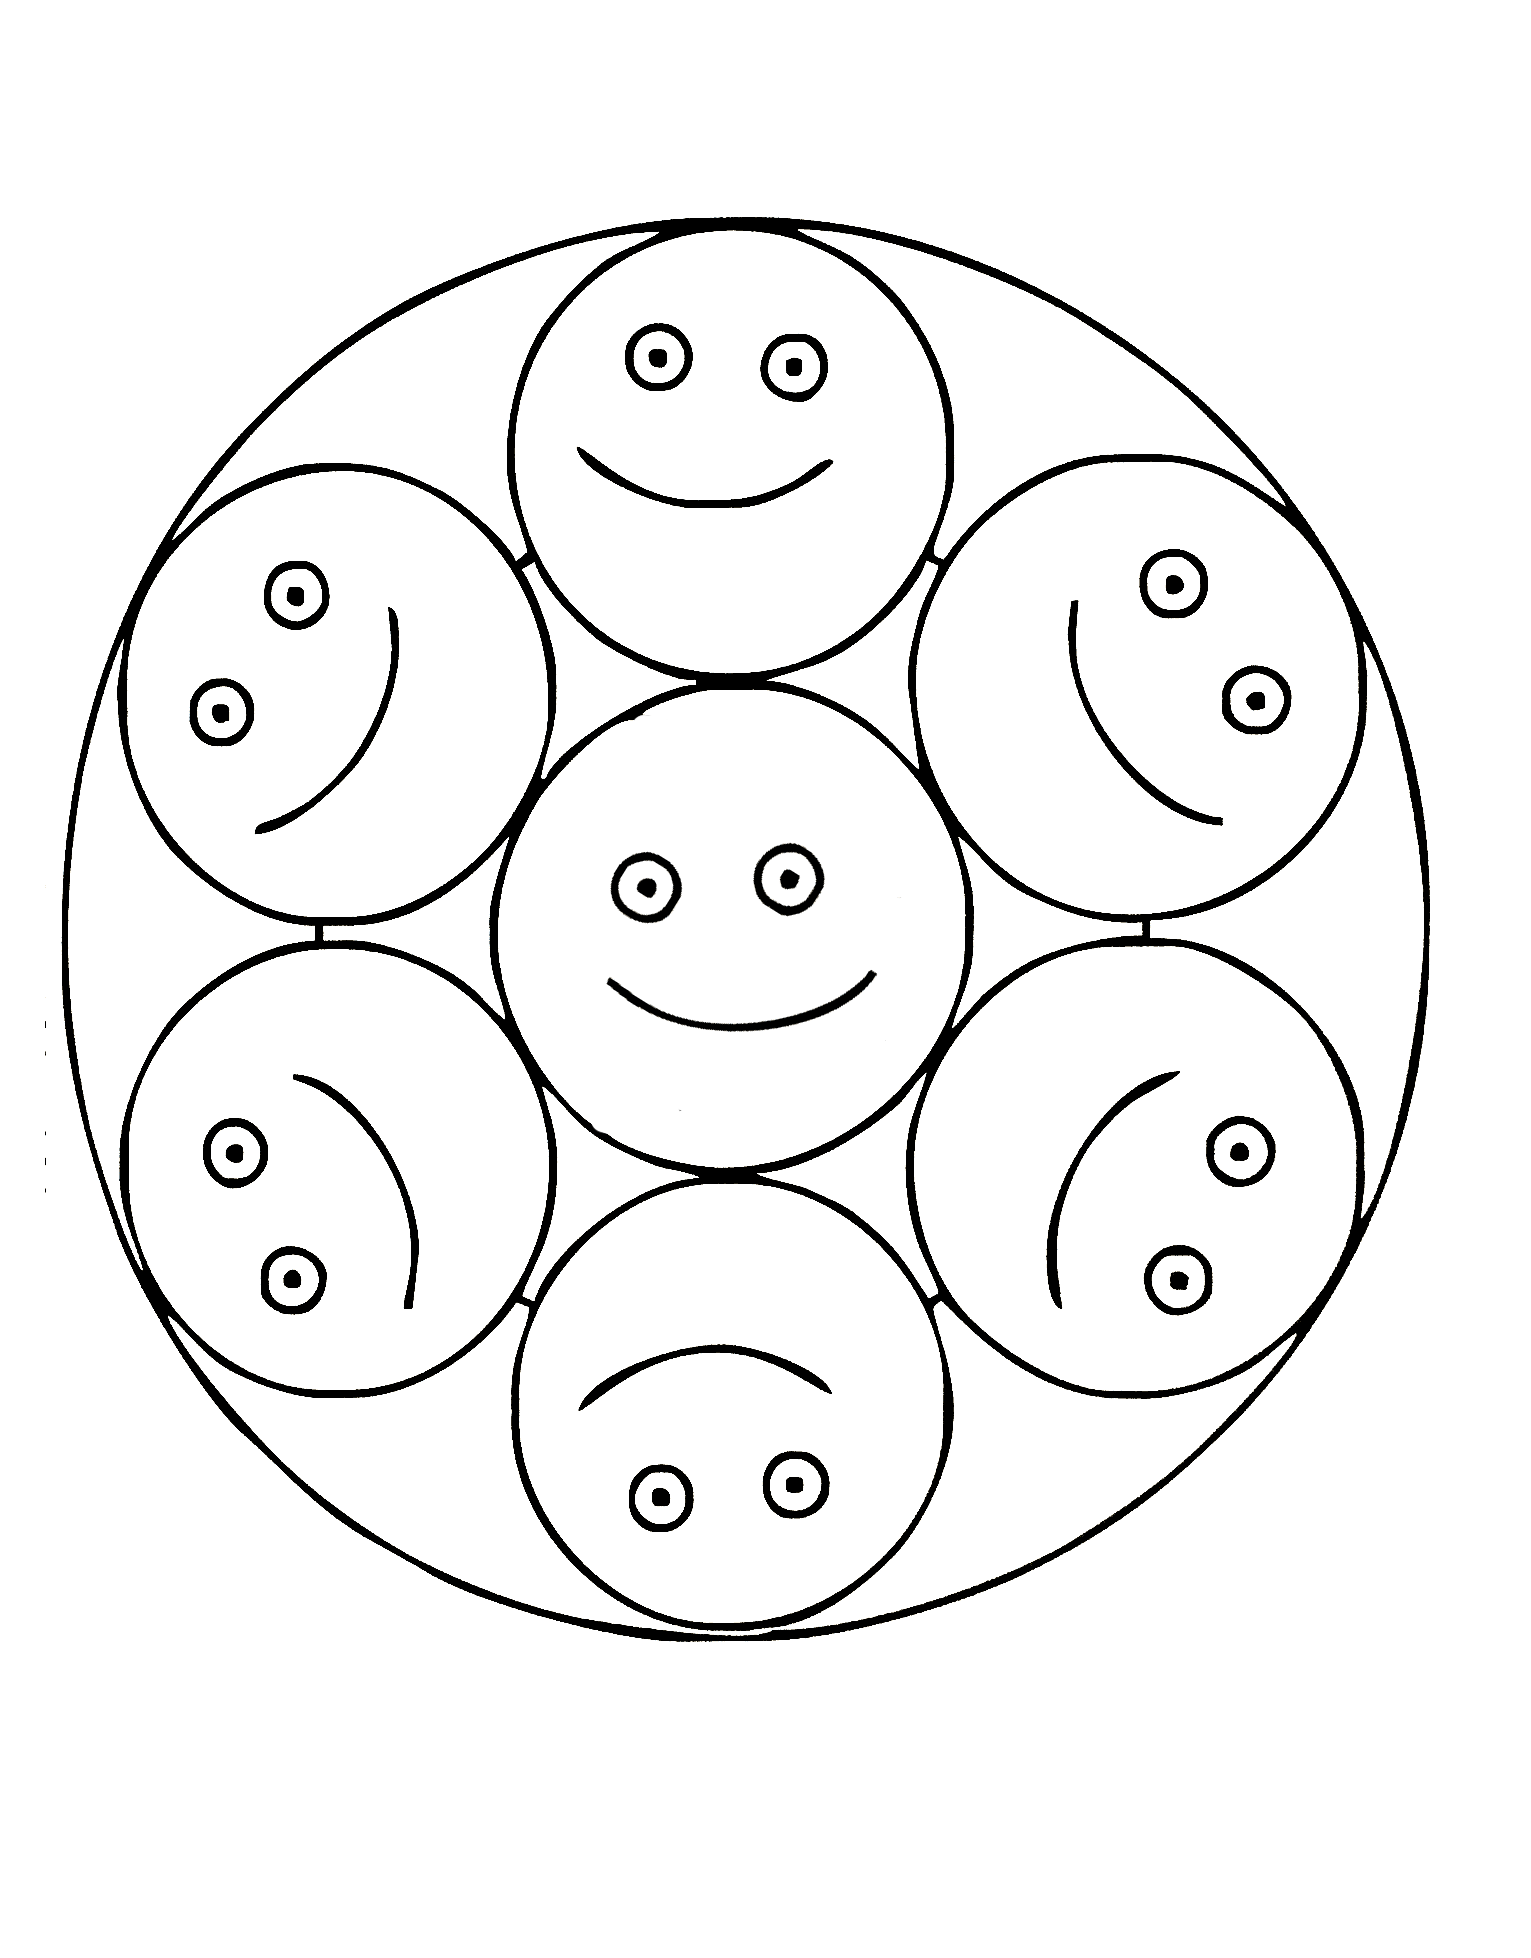 Mandalas free to print 10 - Easy Mandalas for kids - 100% Mandalas Zen & Anti-stress - Page 2